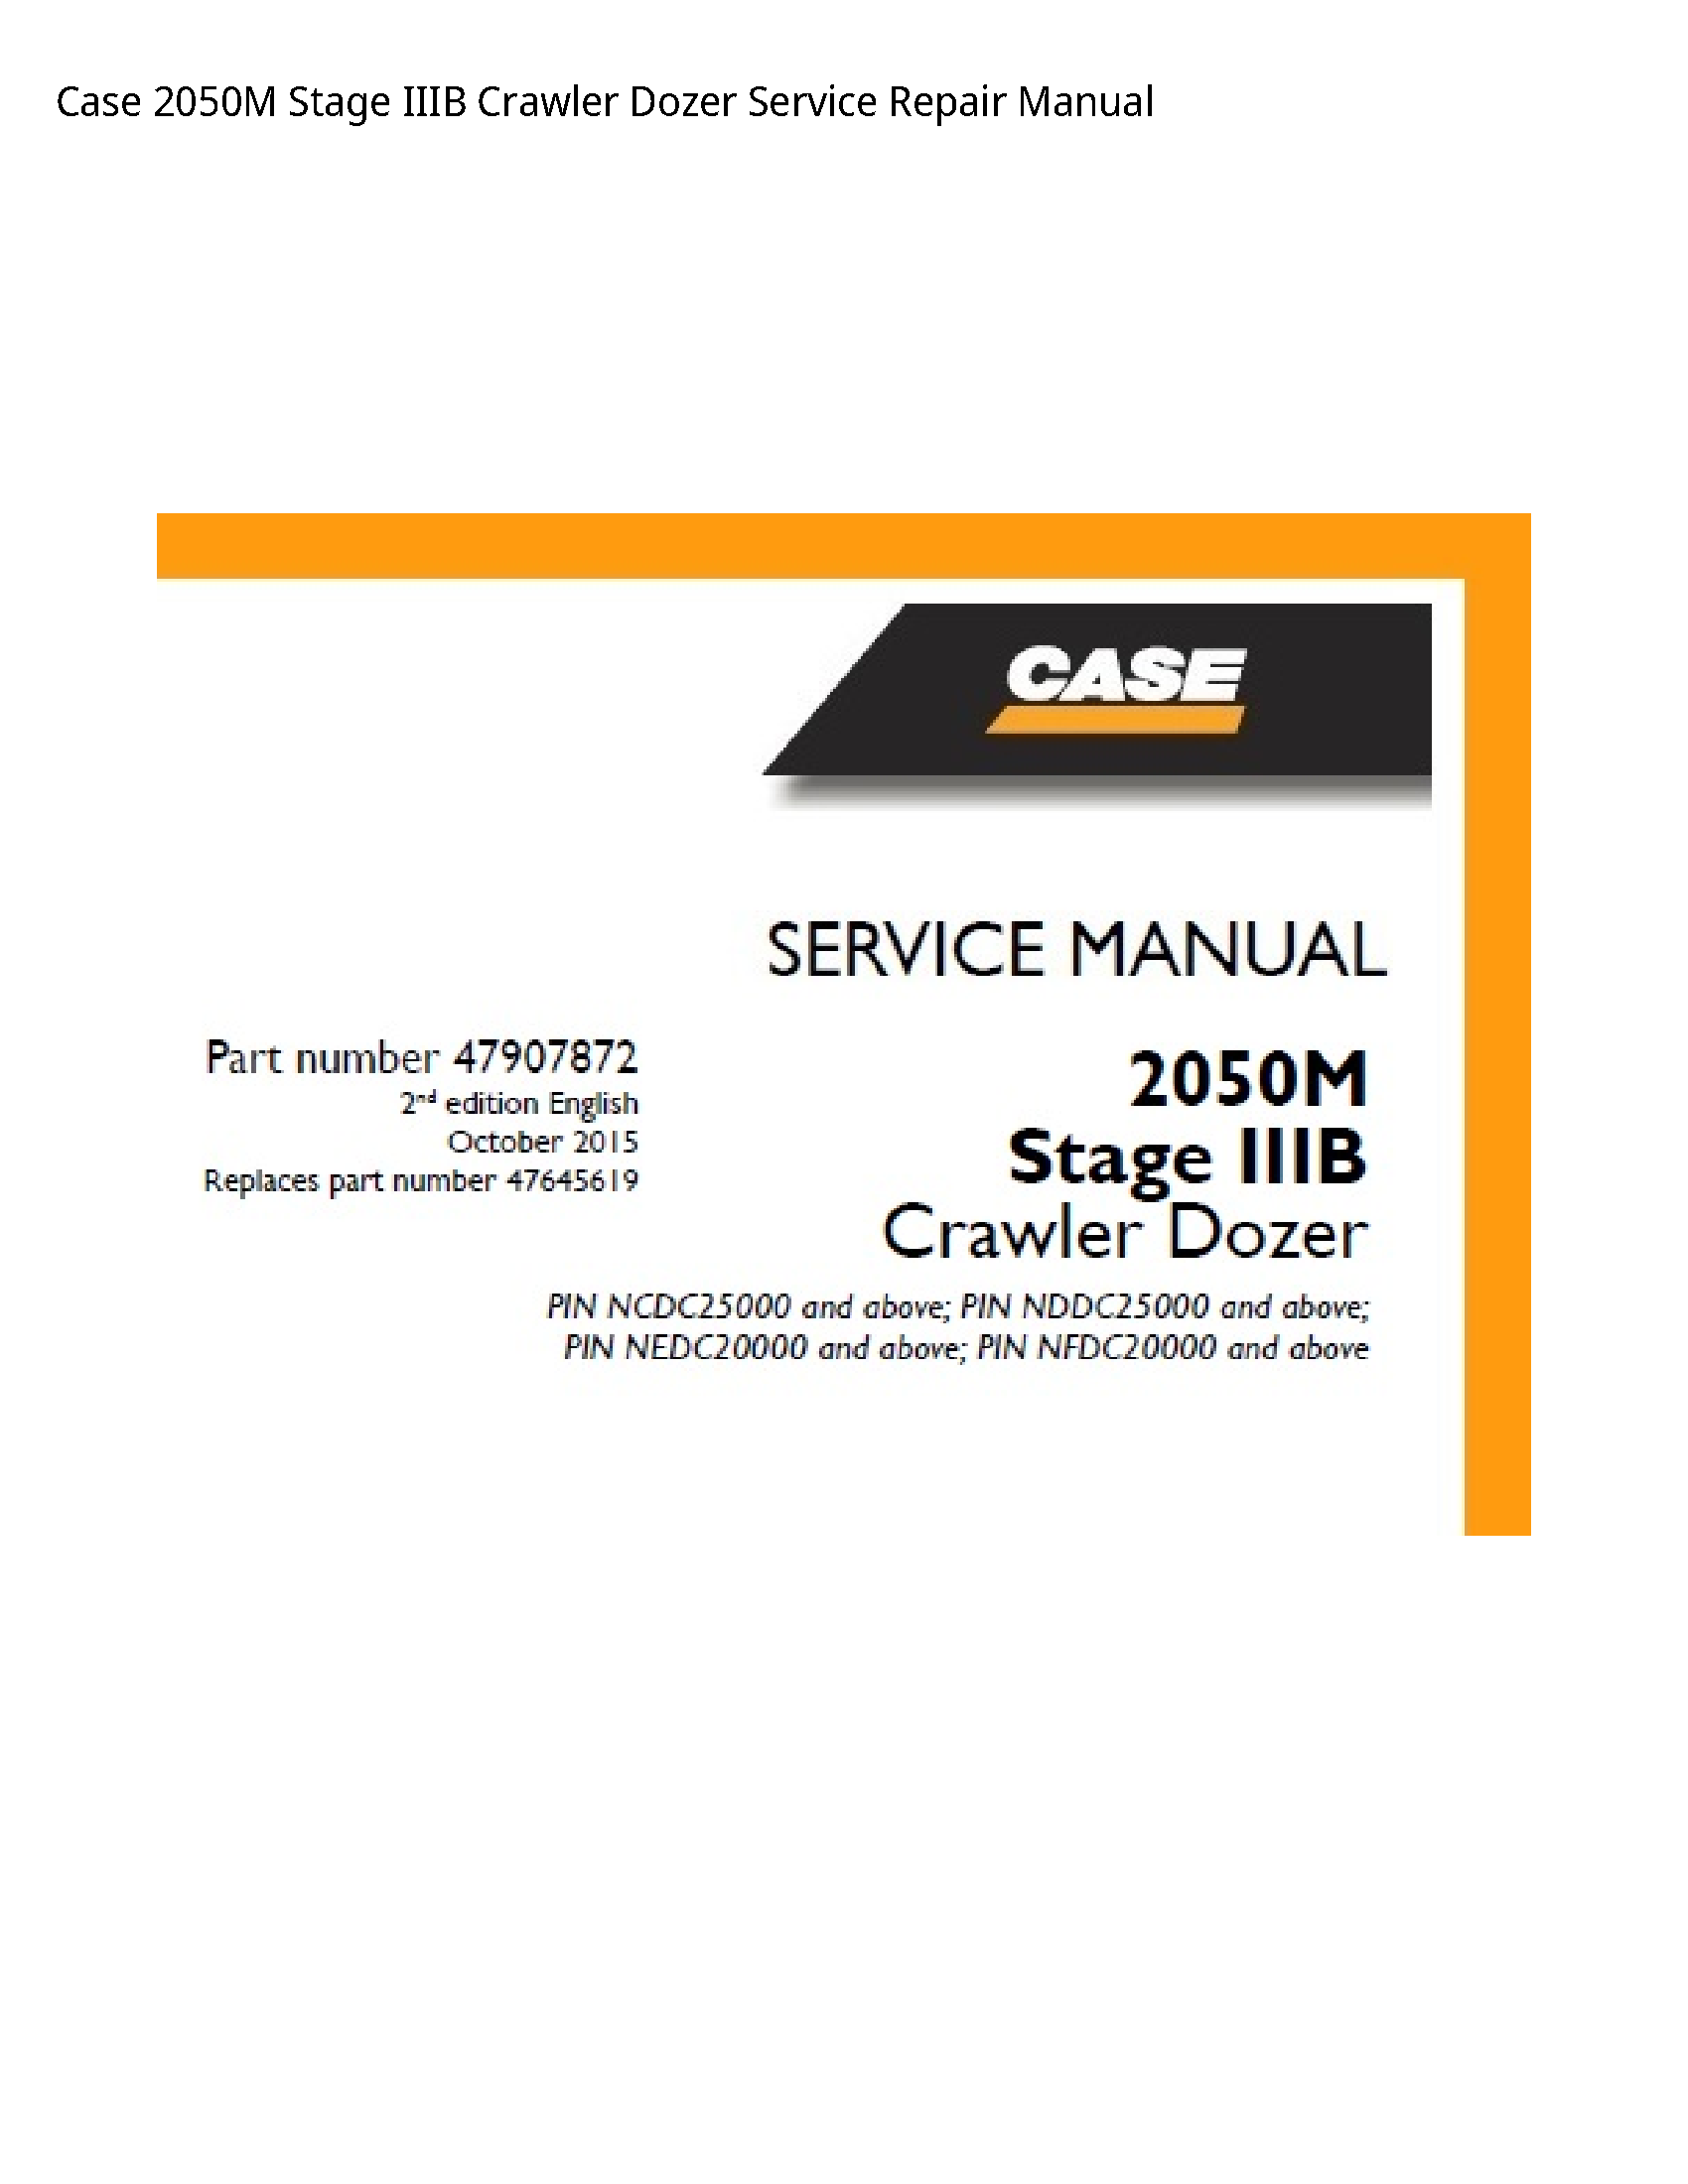 Case/Case IH 2050M Stage IIIB Crawler Dozer manual